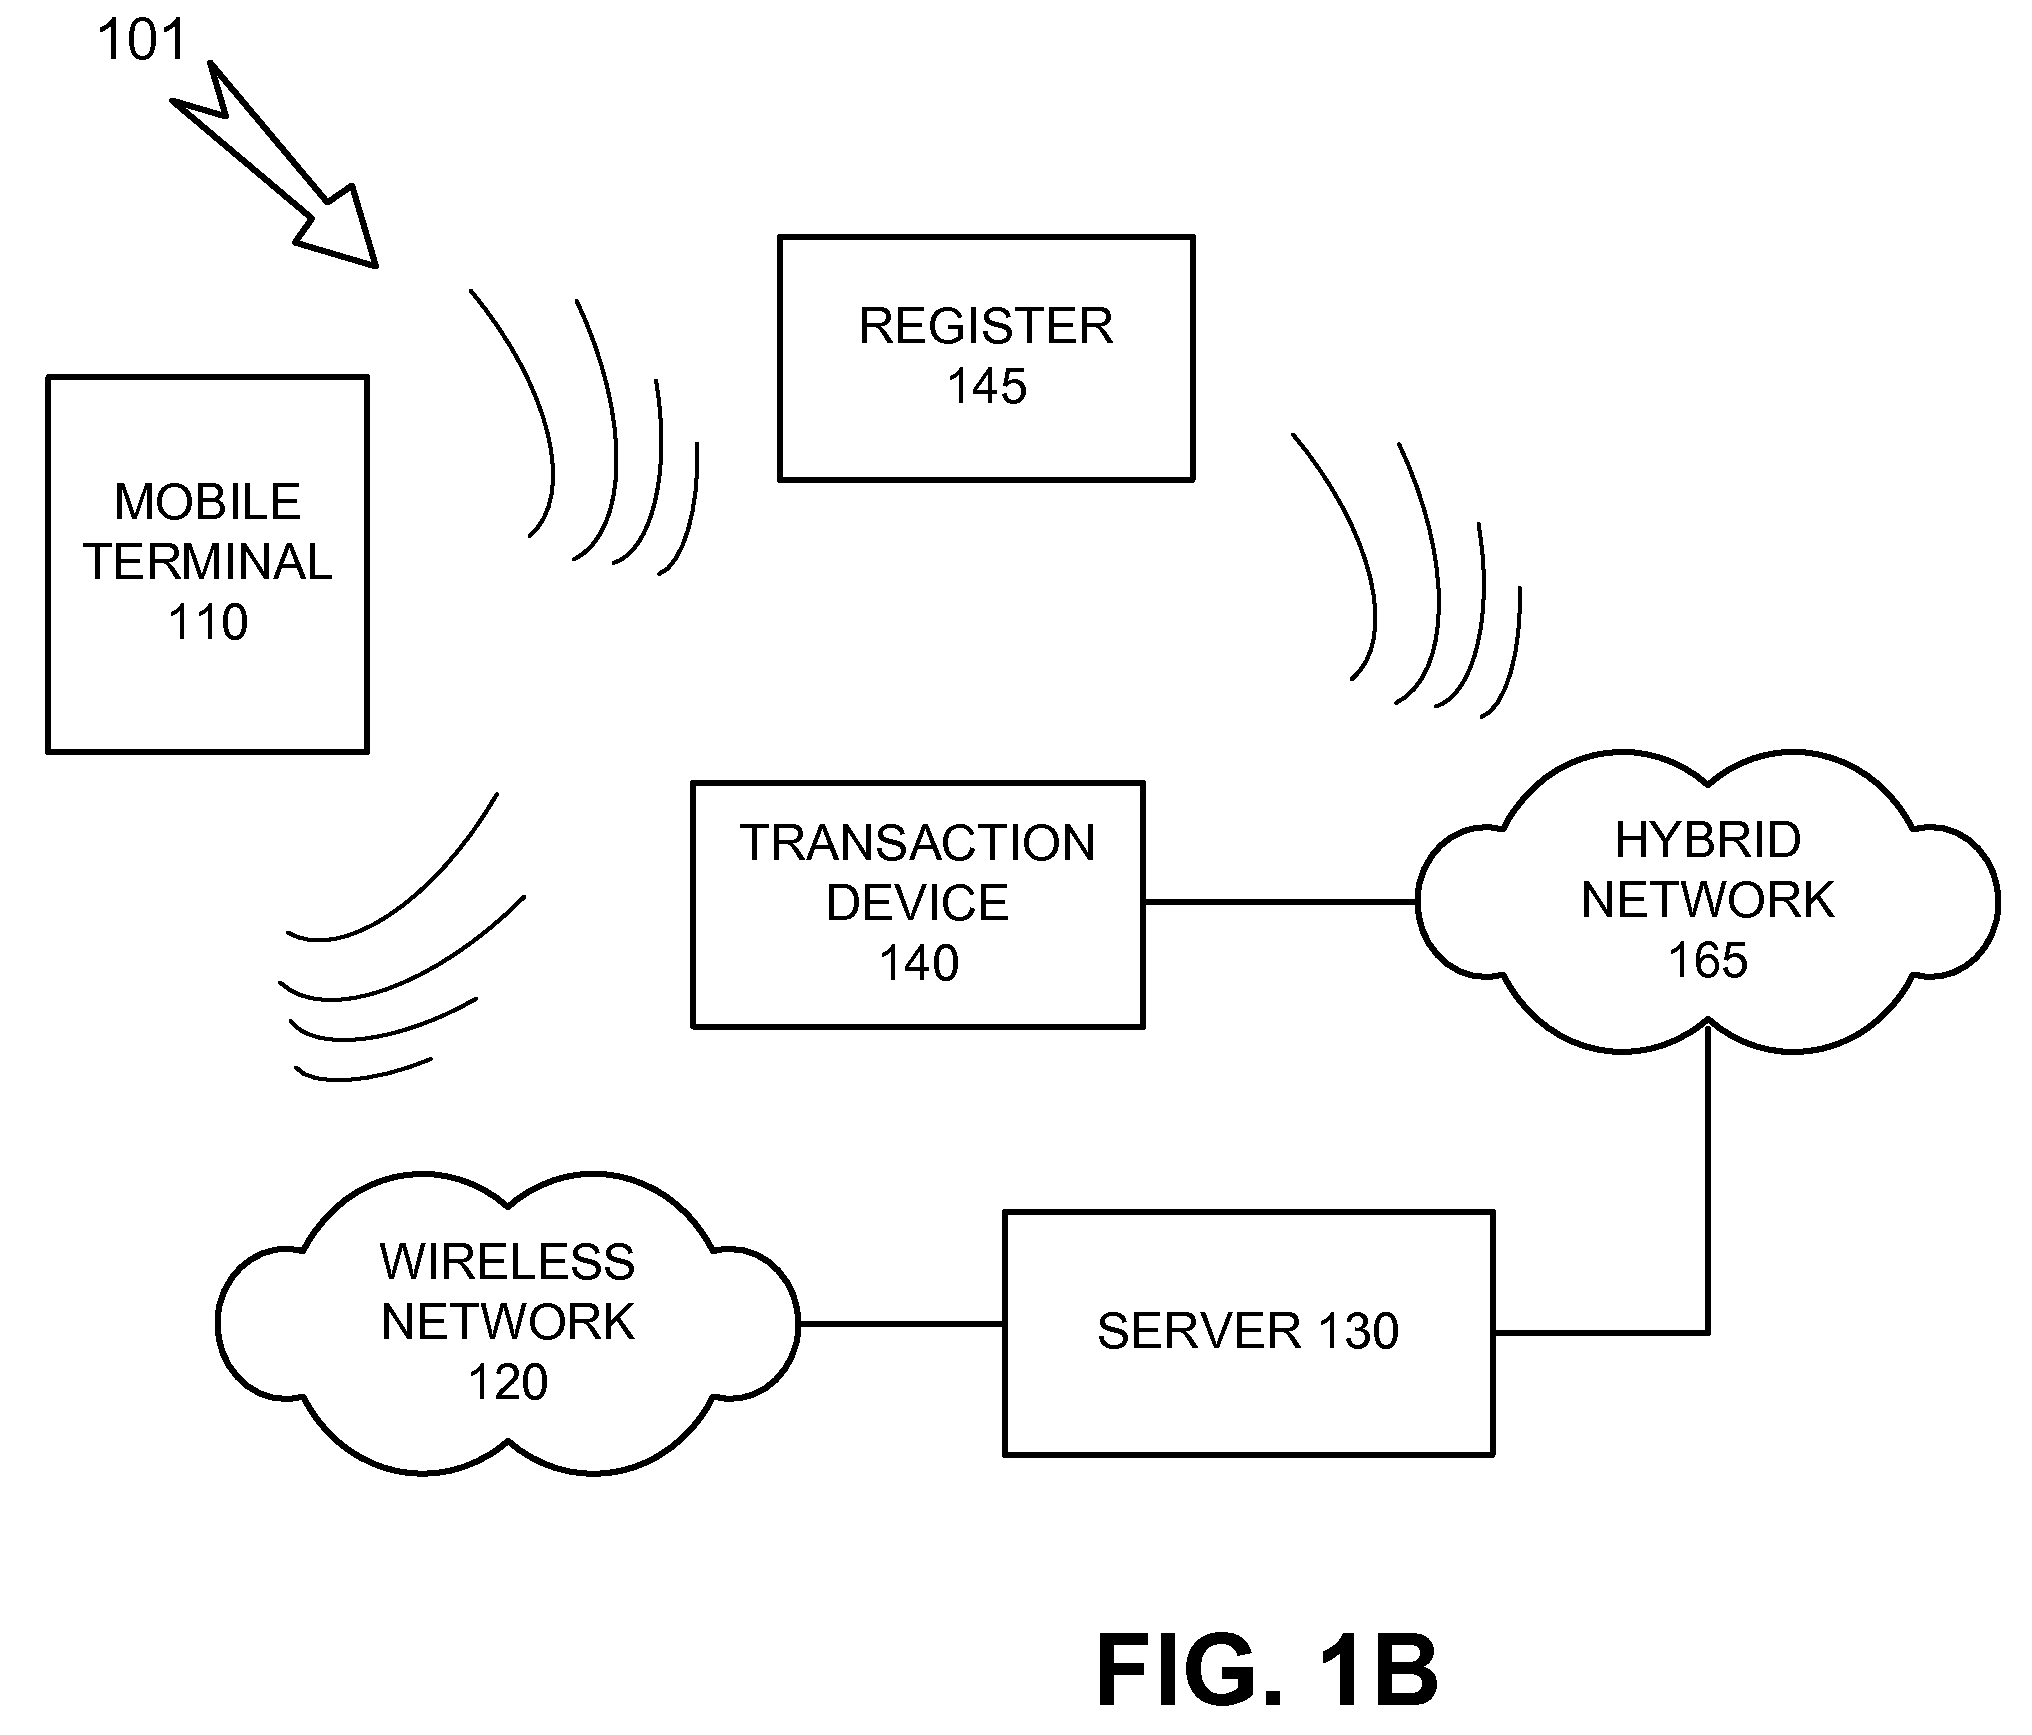 Multi-function transaction device